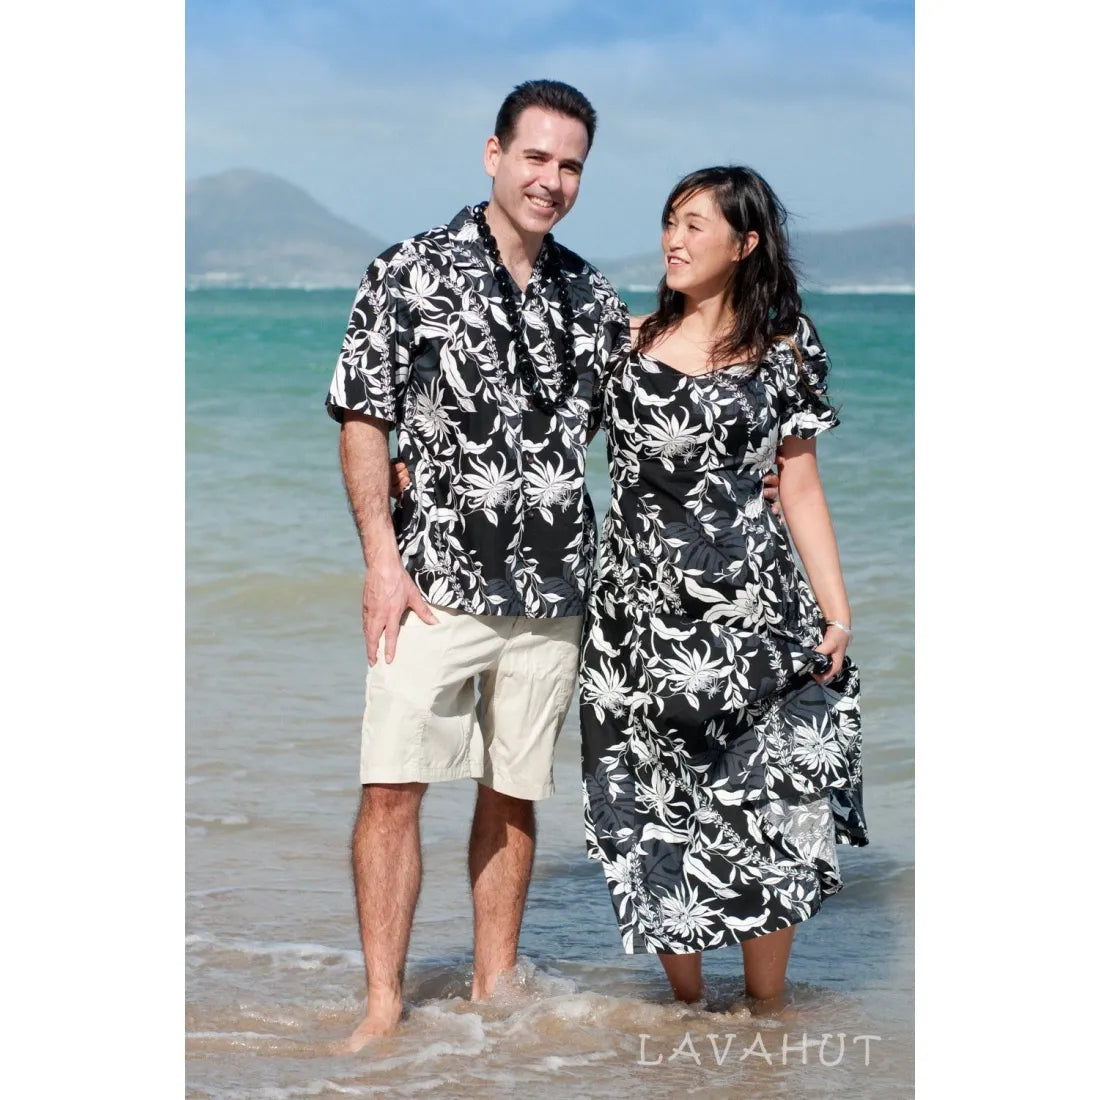 Punahou Black Hawaiian Cotton Shirt - Made In Hawaii